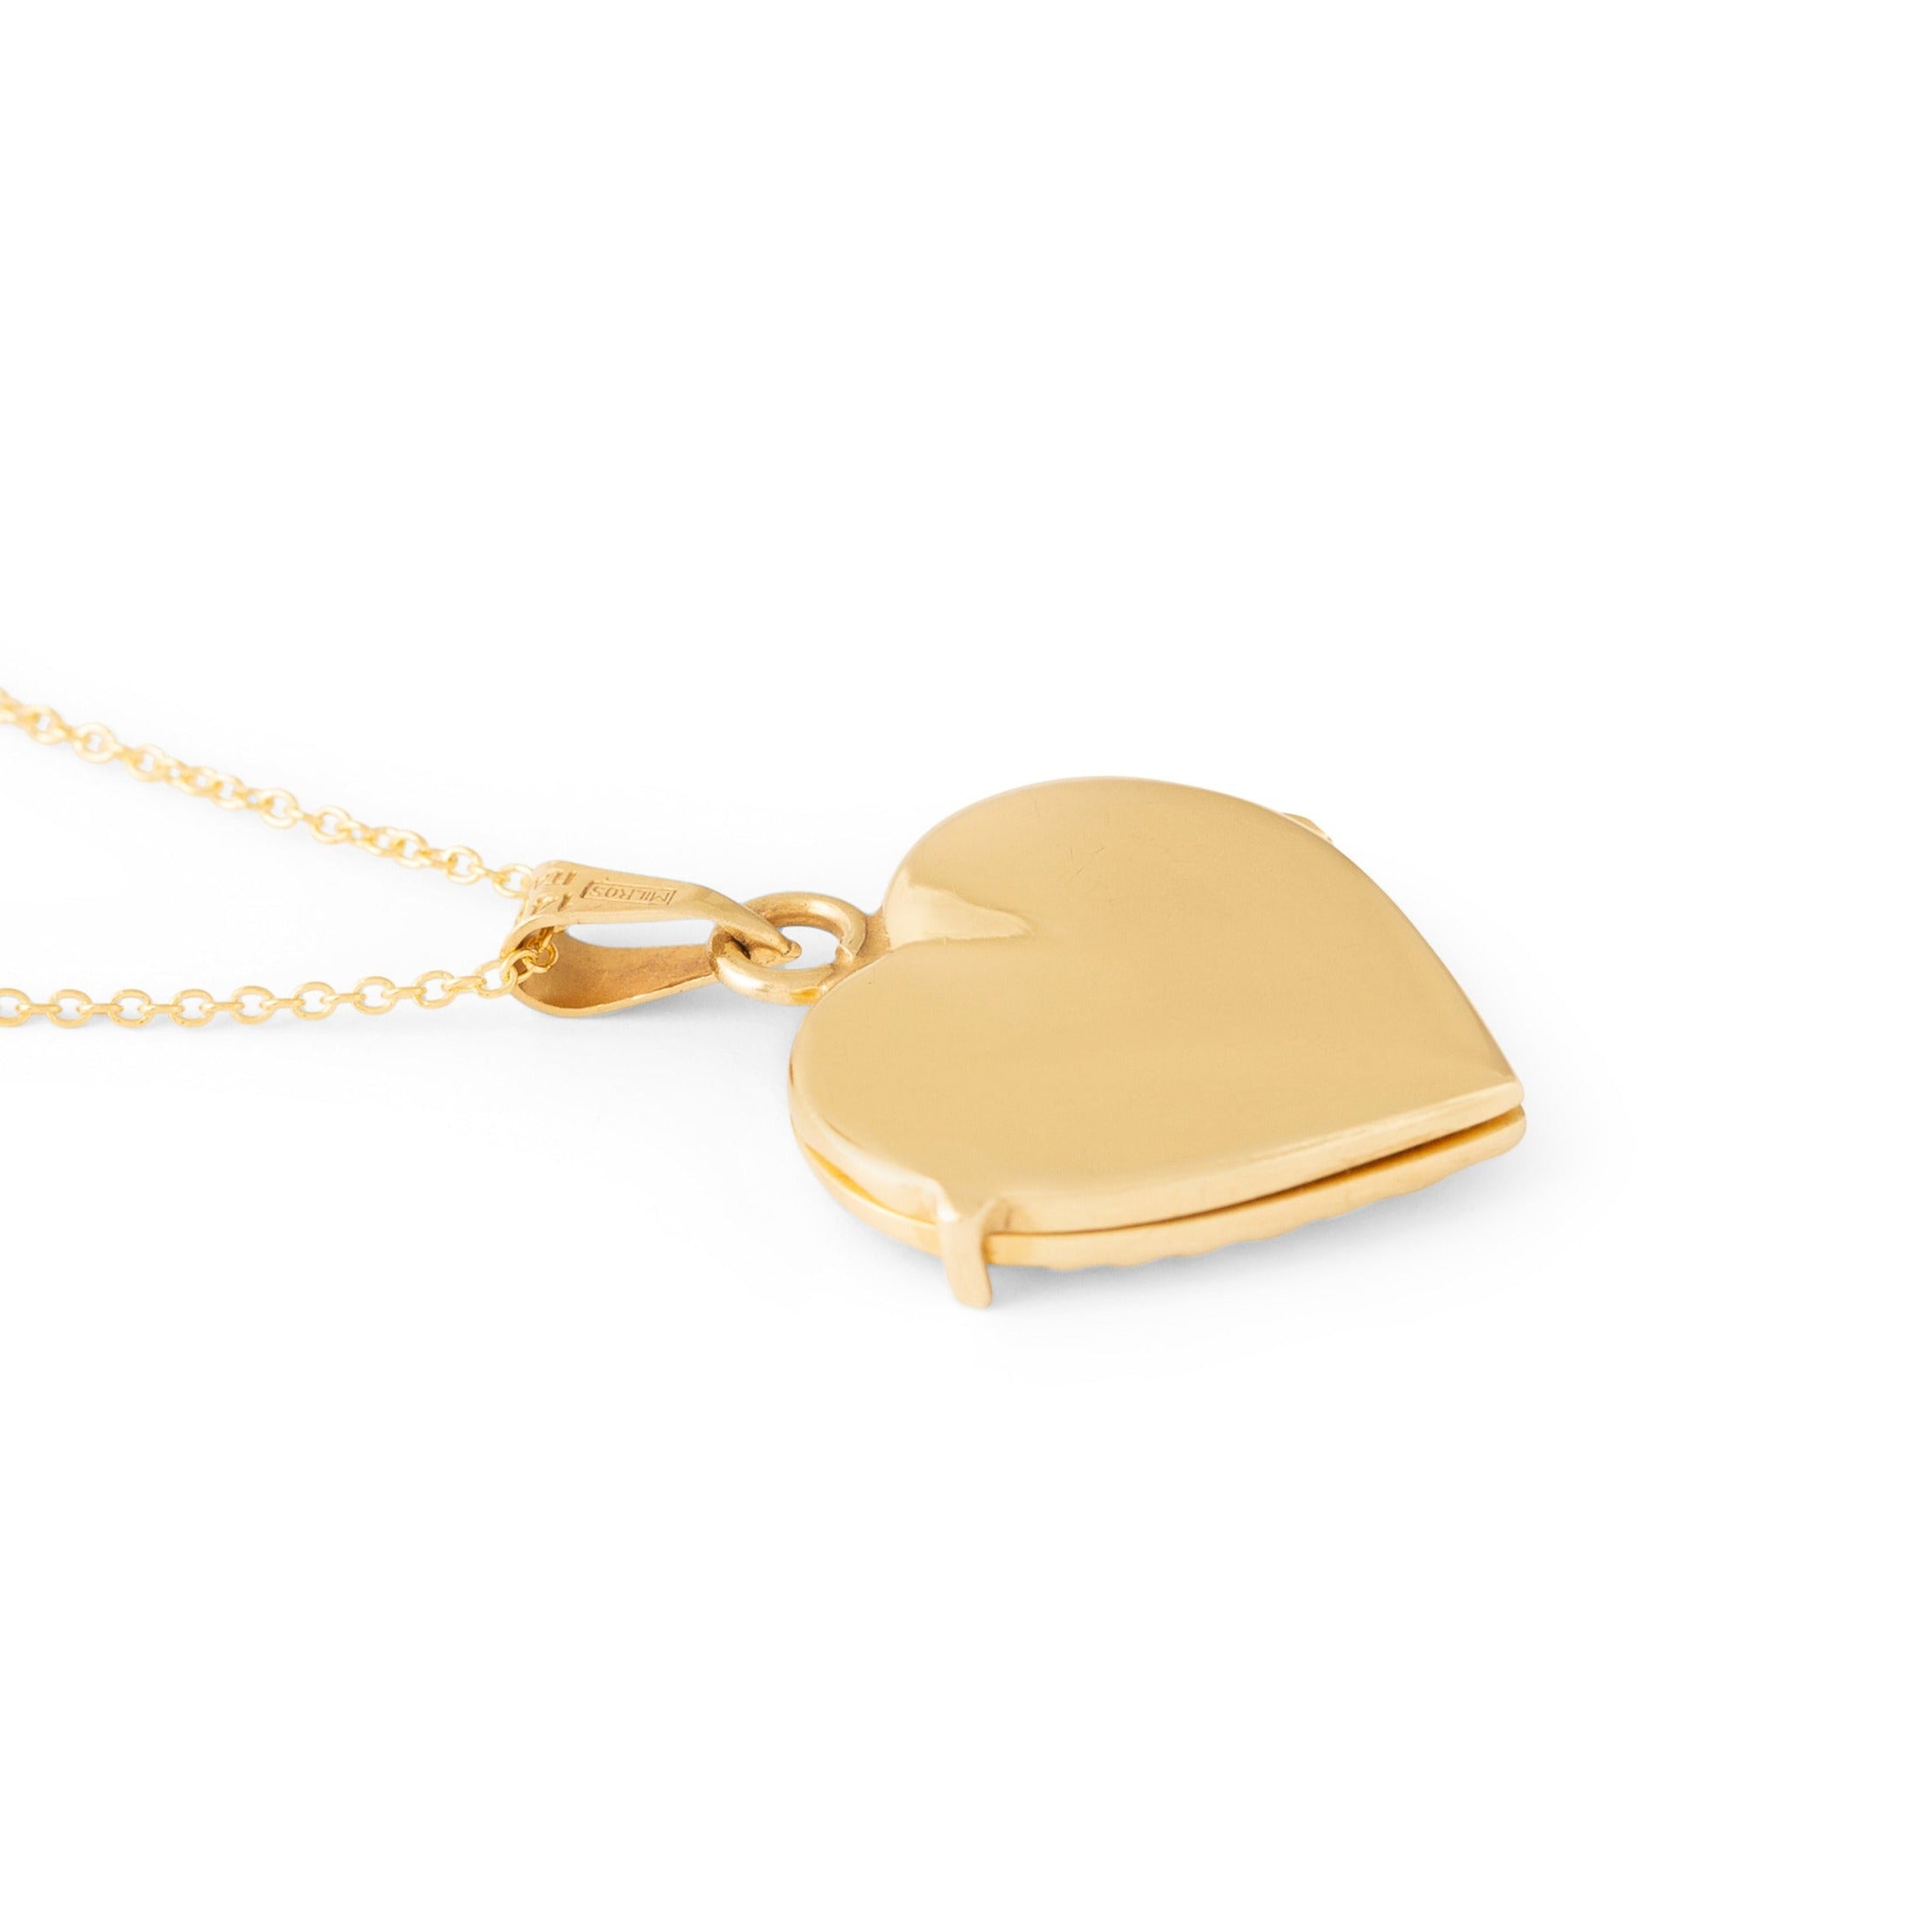 Italian Engraved Heart 14k Gold Locket